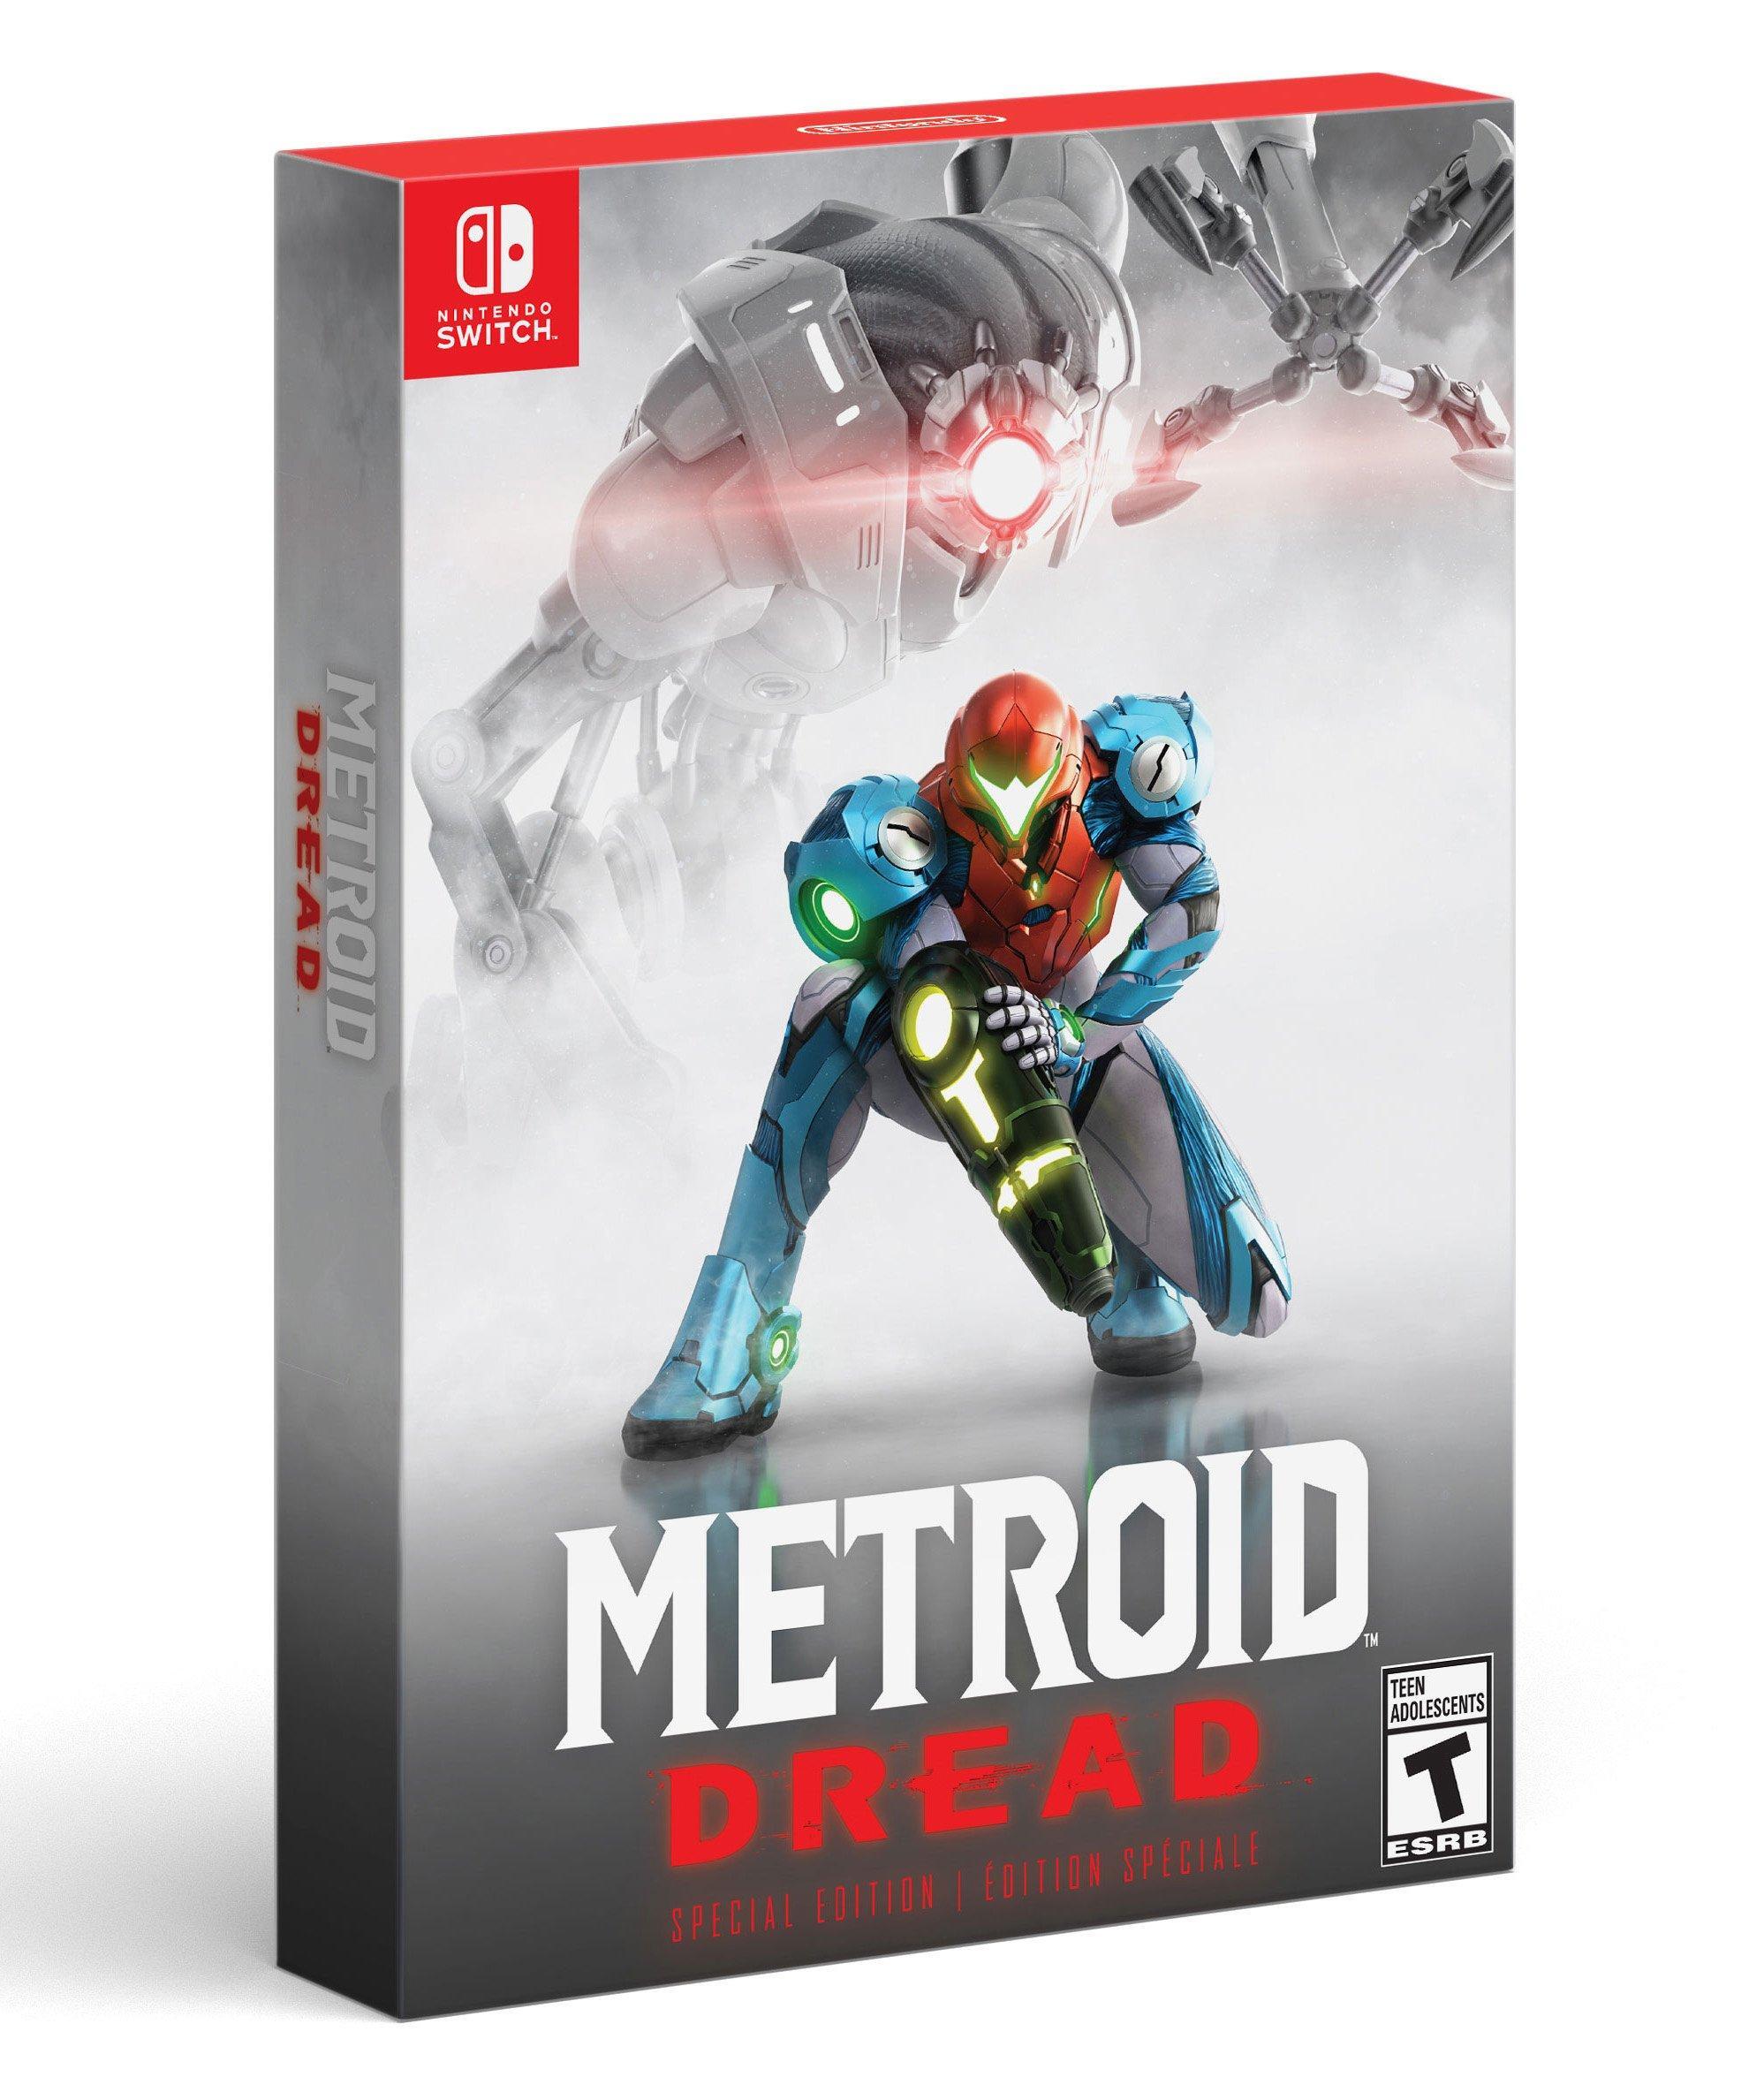 Nintendo Metroid Dread Special Edition Nintendo Switch